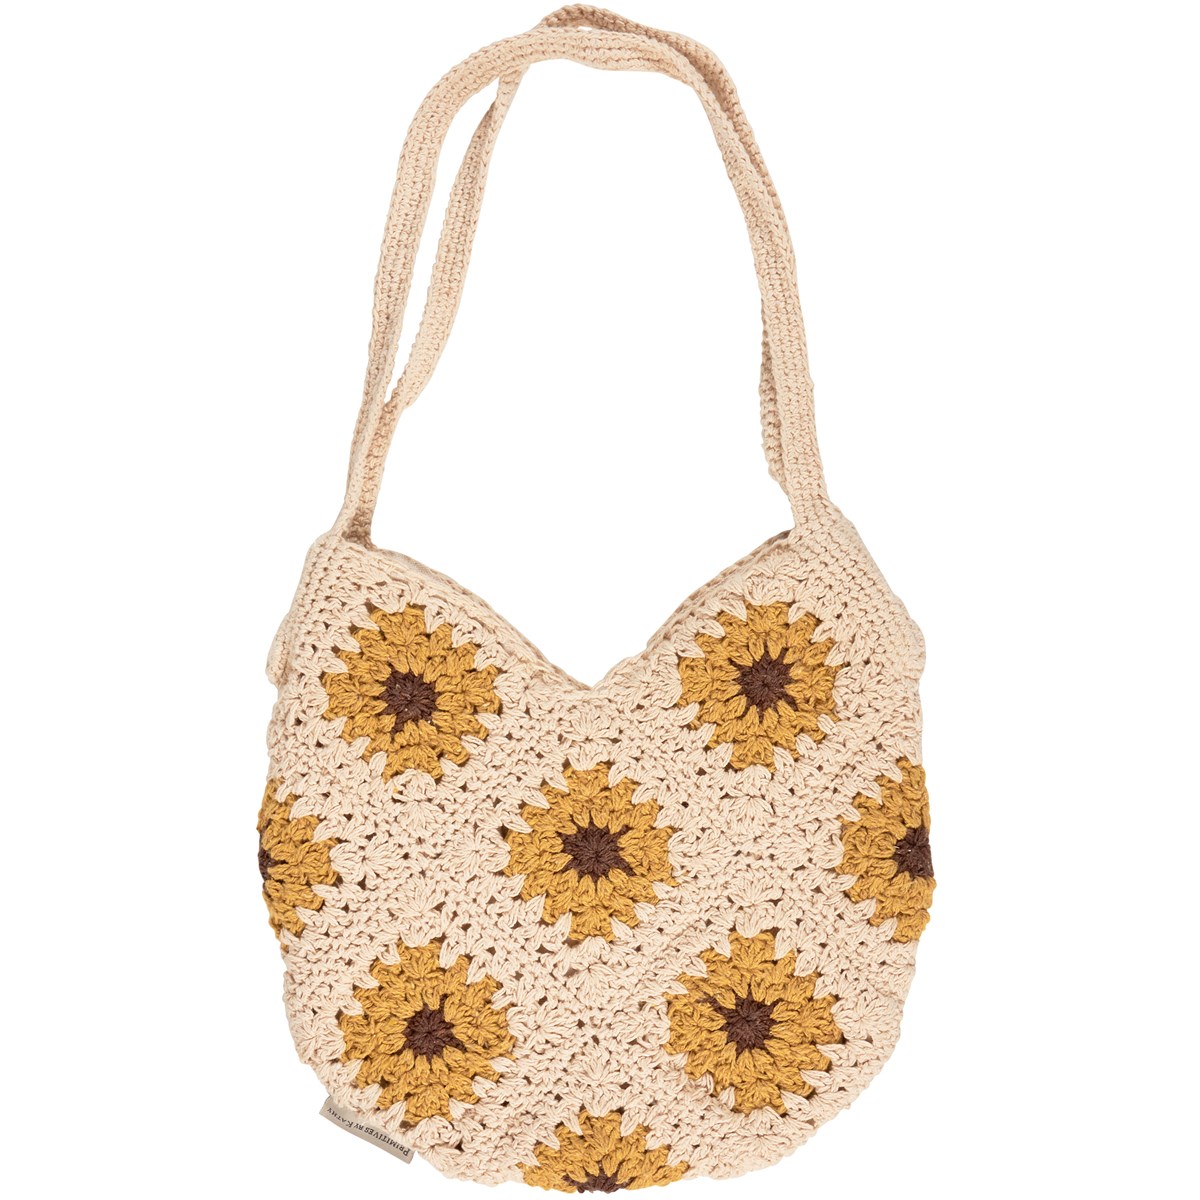 Crochet Sunflower Tote - Cotton